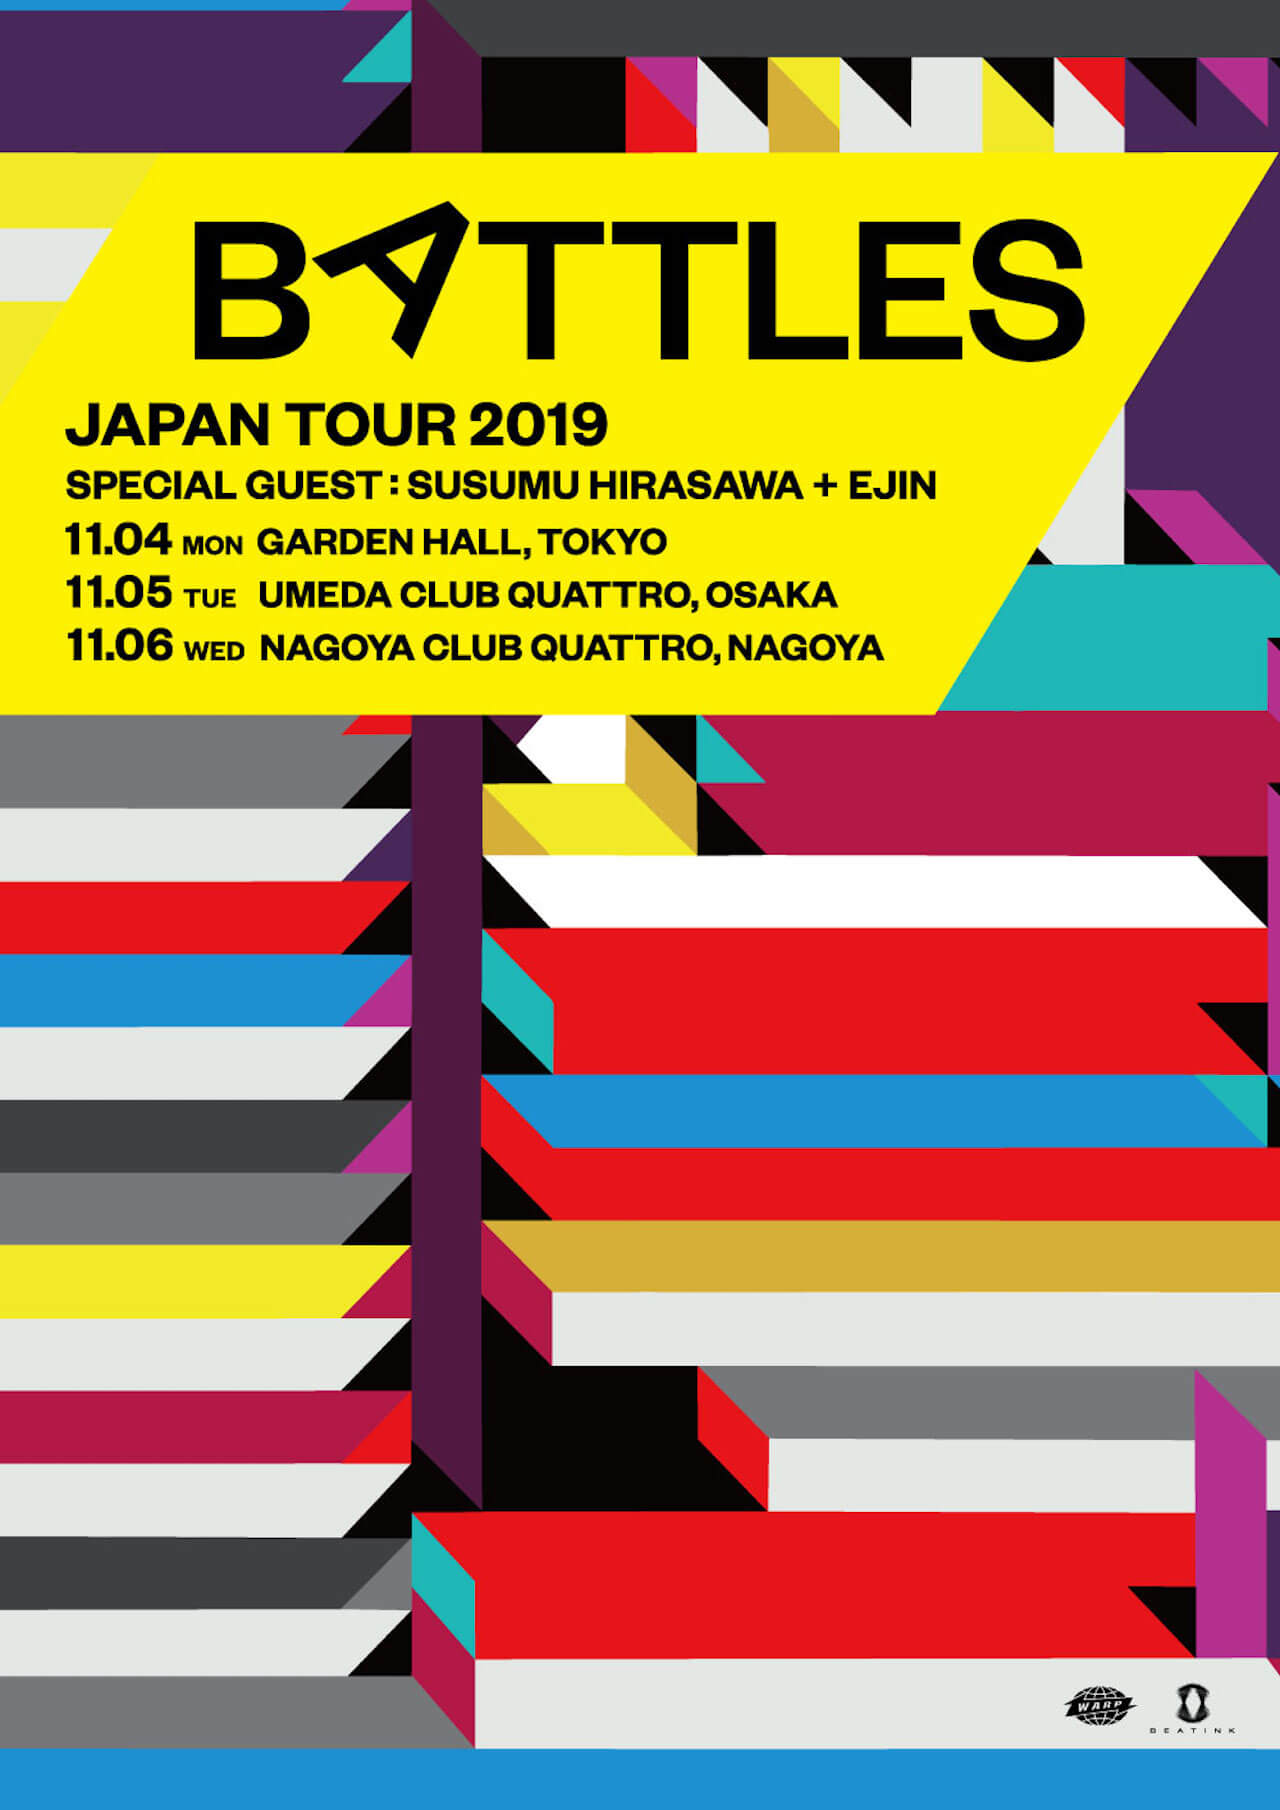 BATTLESのジャパンツアーにスペシャルゲスト、平沢進＋会人（EJIN）が出演決定！ music191010-battles-hirasawasusumu-1